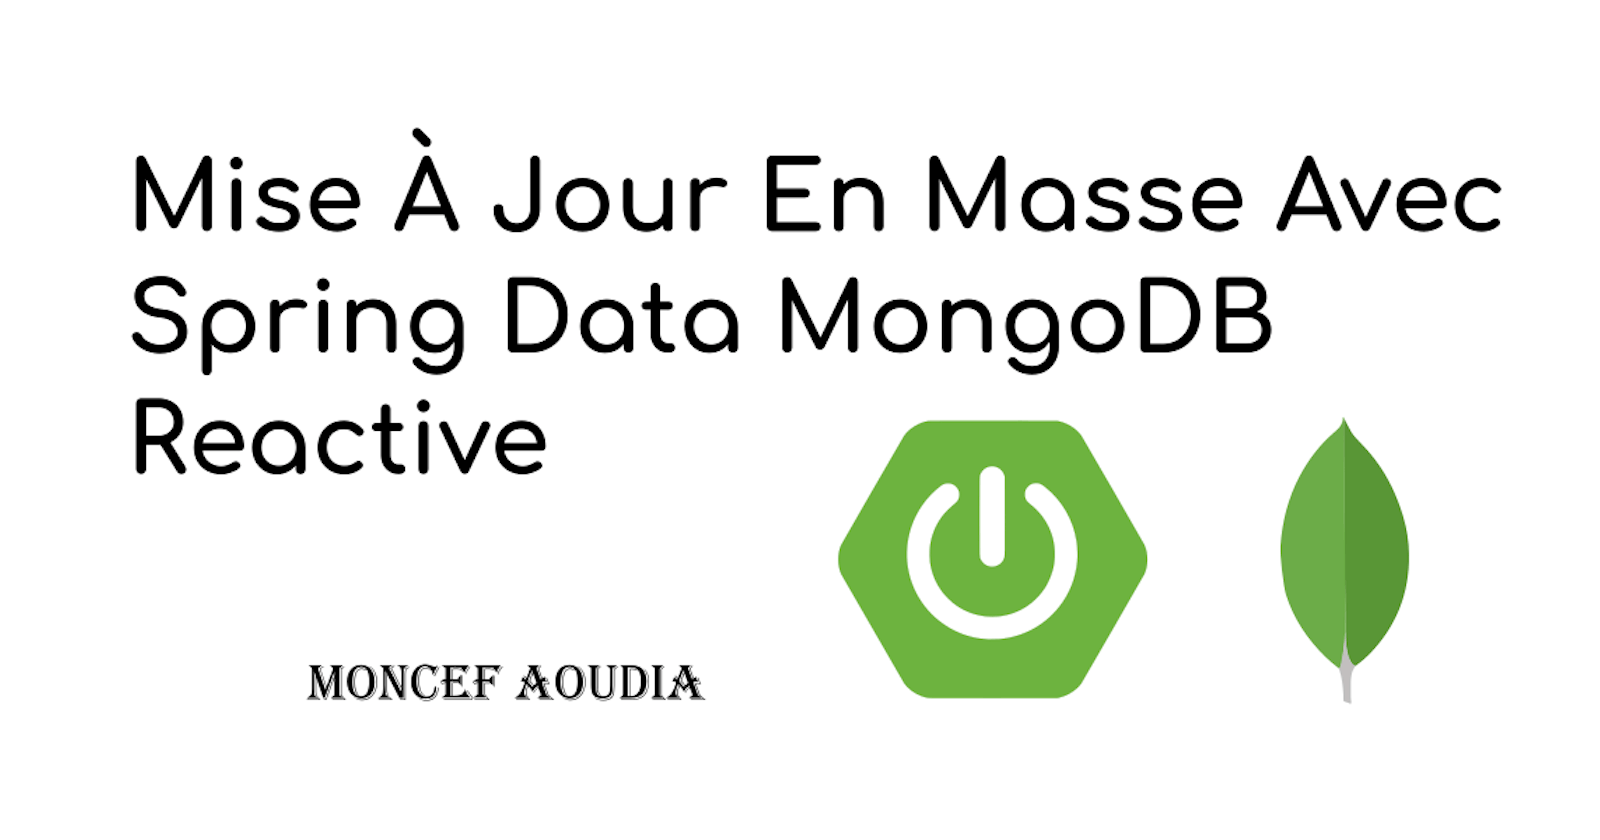 Mise À Jour En Masse Avec Spring Data MongoDB Reactive